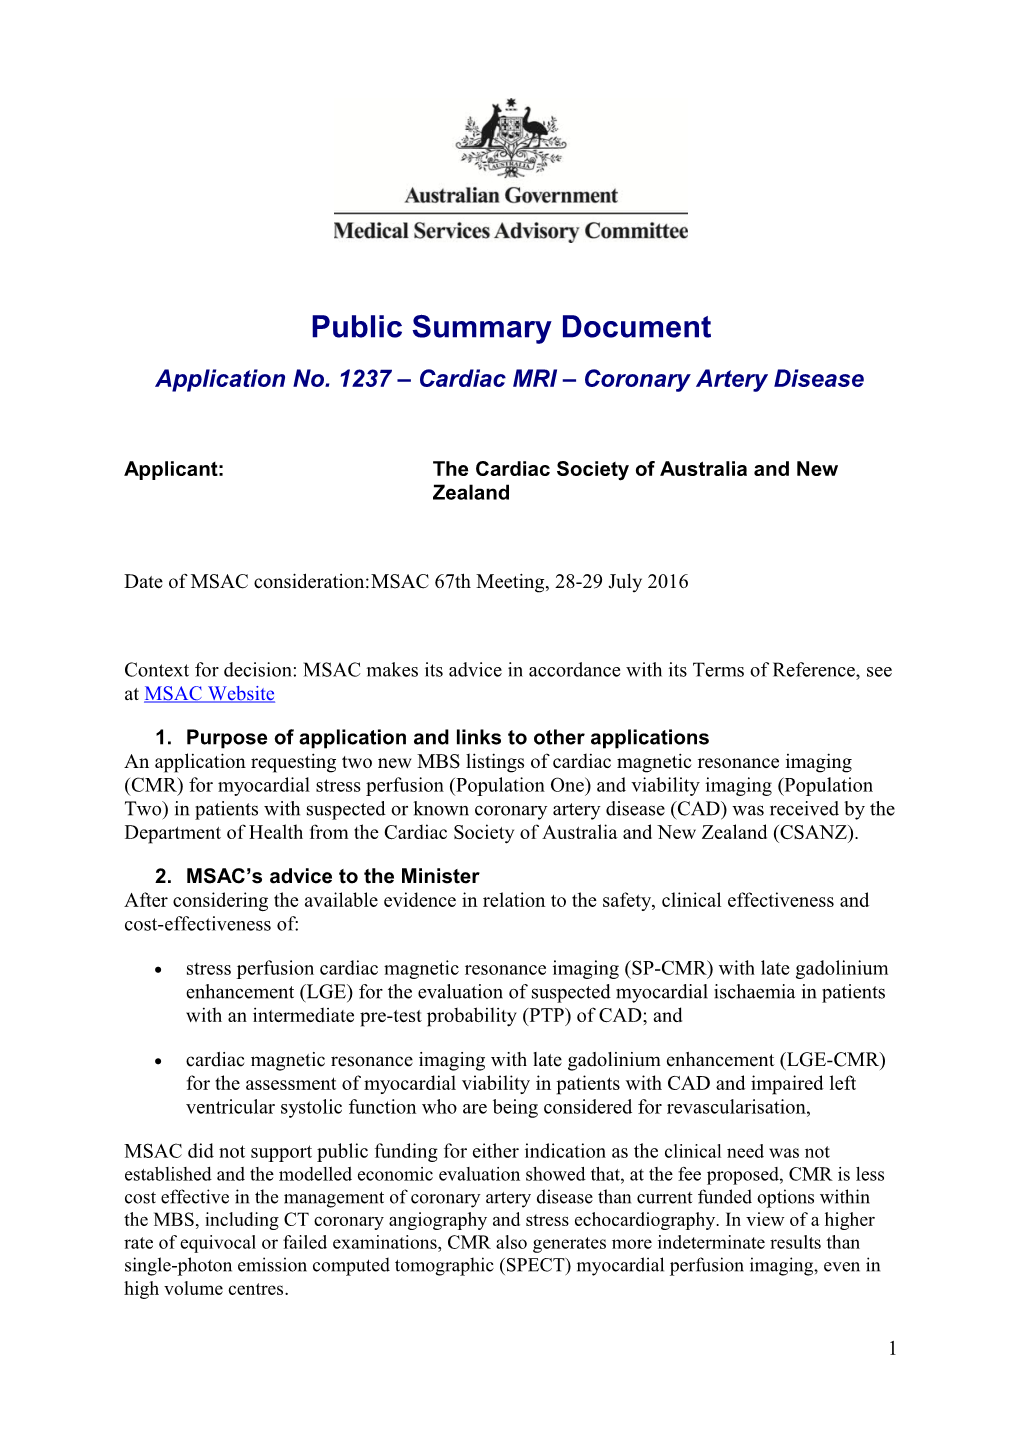 Application No. 1237 Cardiac MRI Coronary Artery Disease